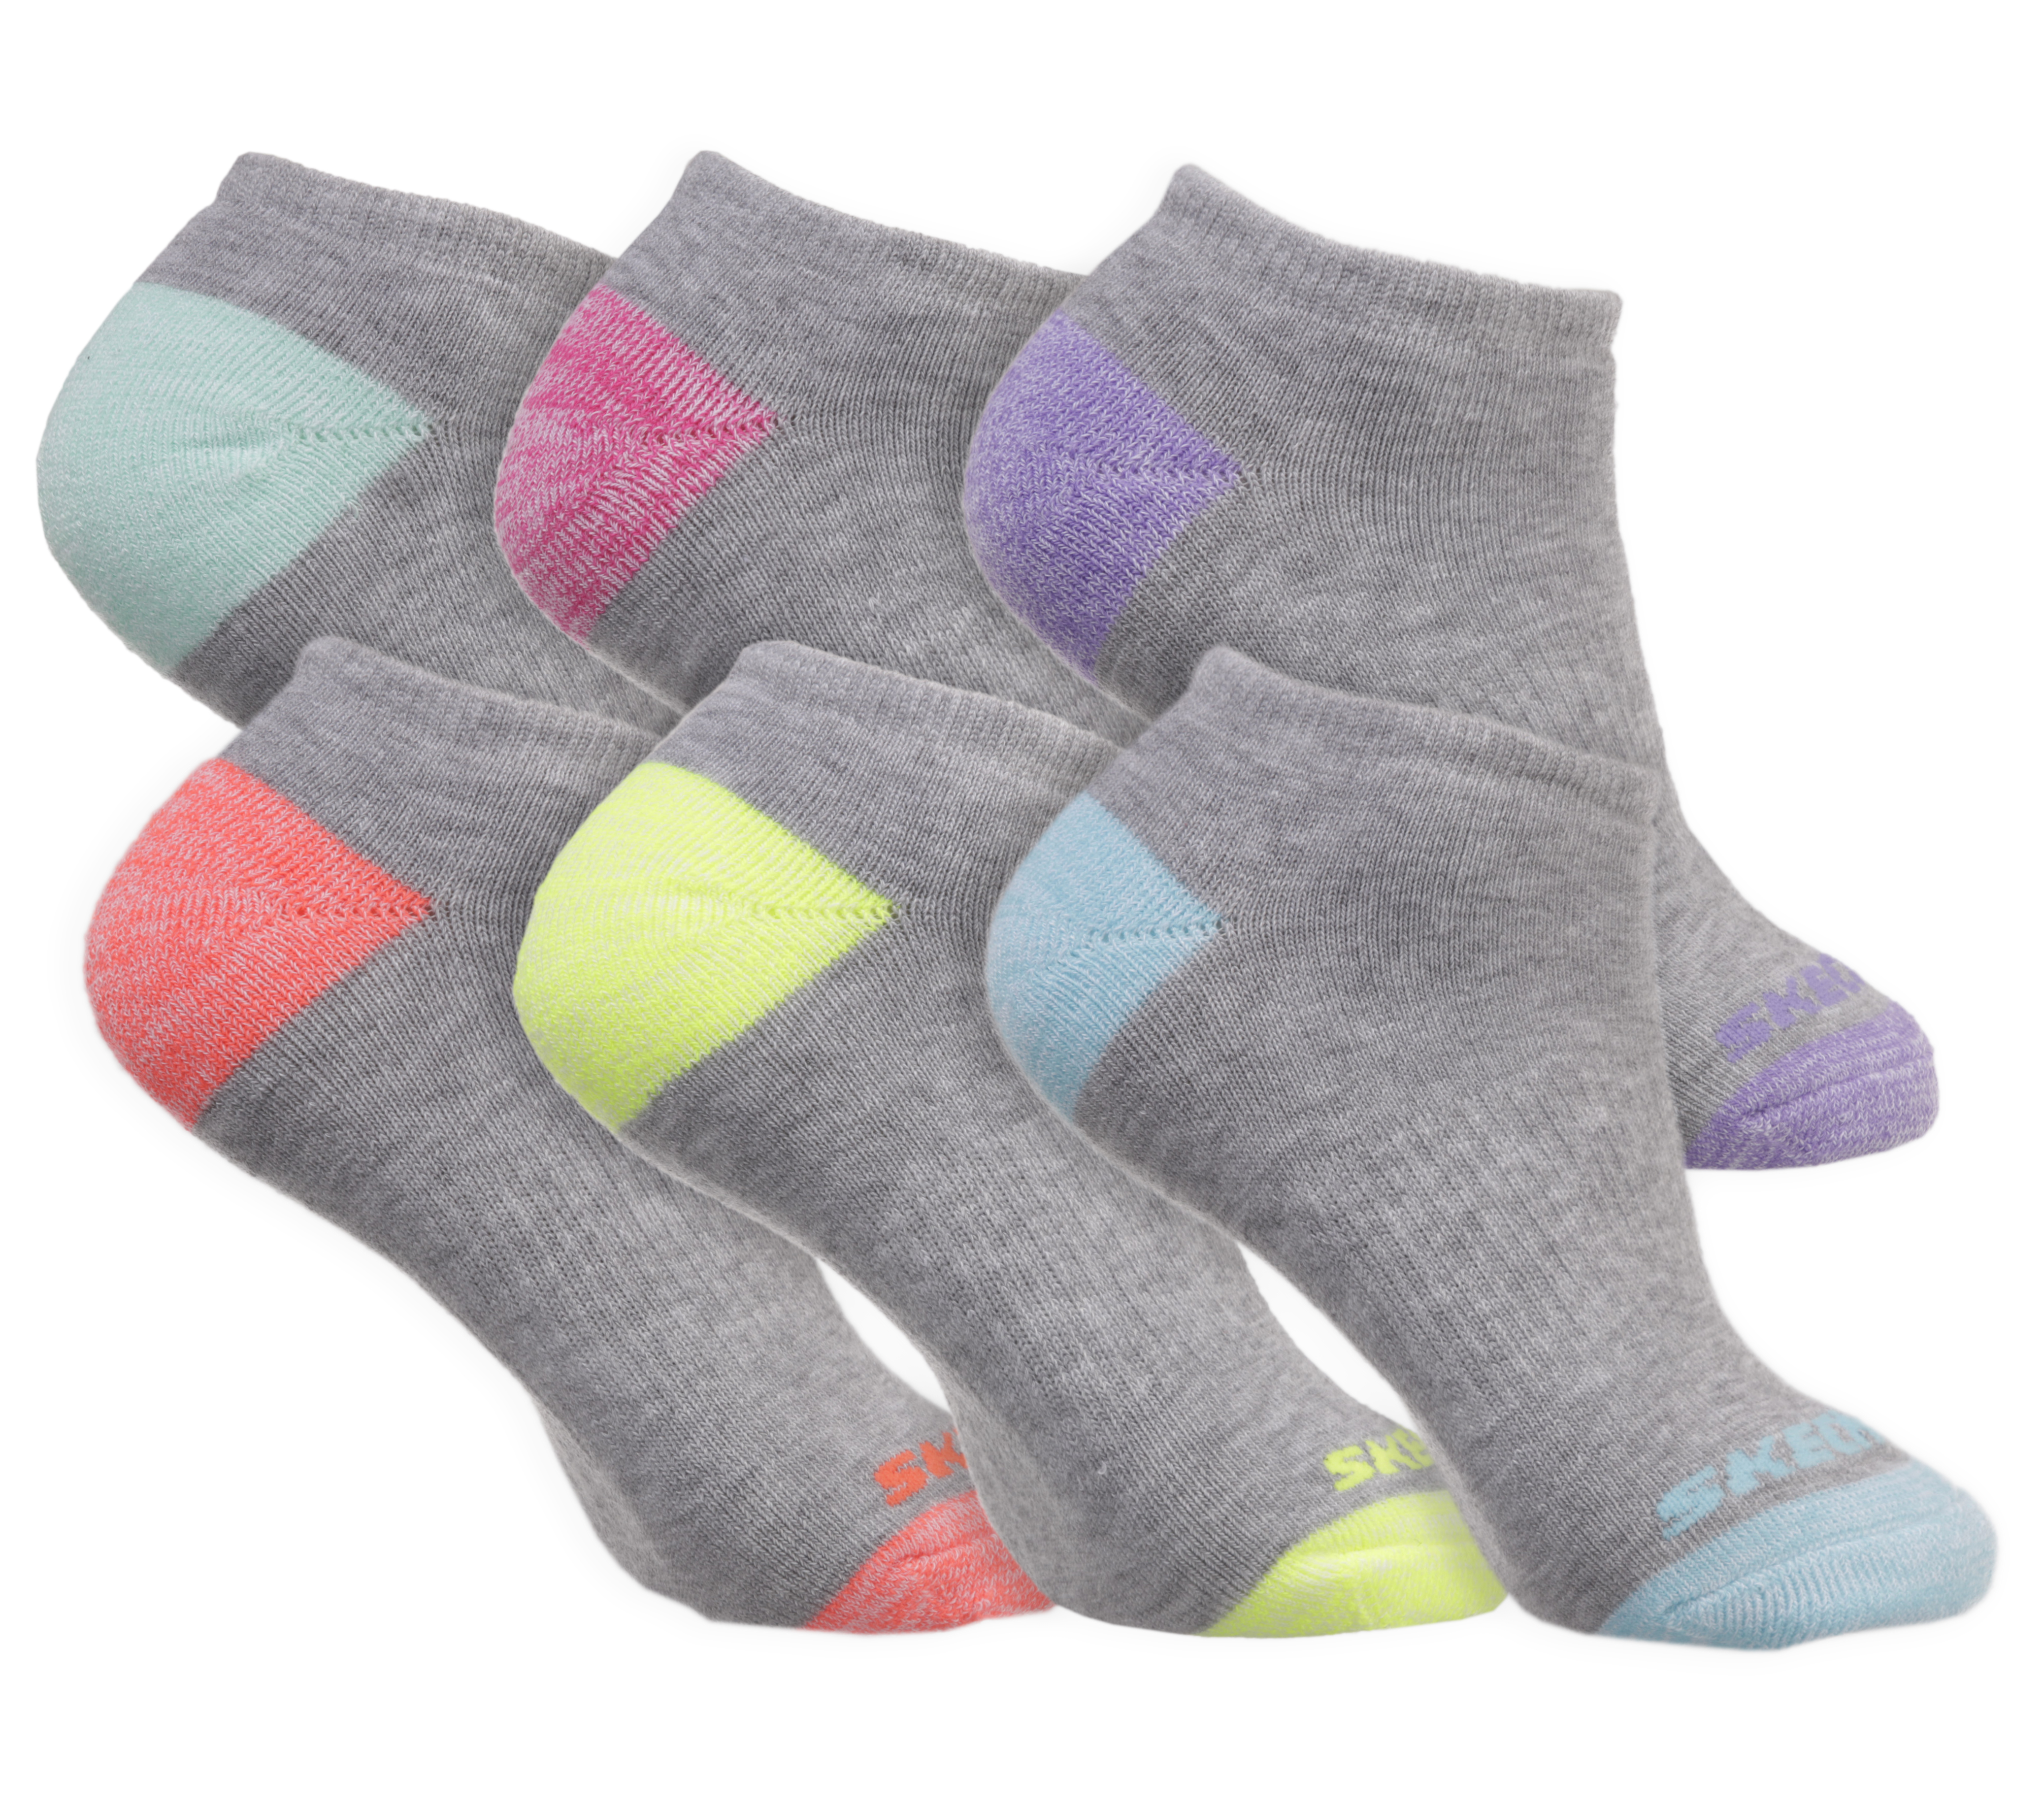 Shop the 6 Pack Low Cut Walking Socks 